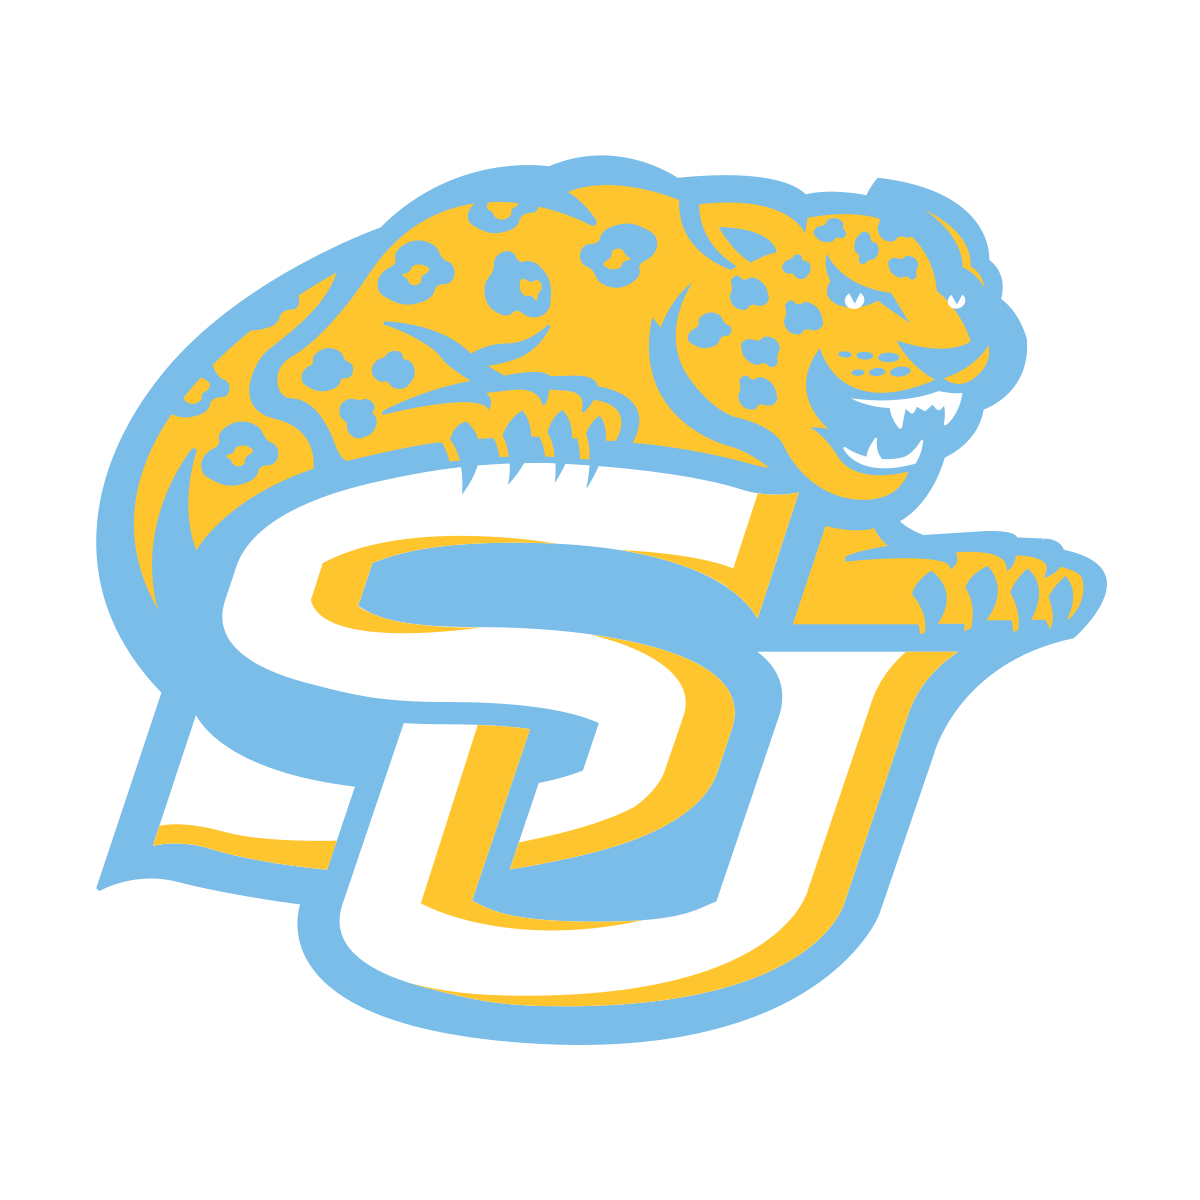 Southern Jaguars logo PNG